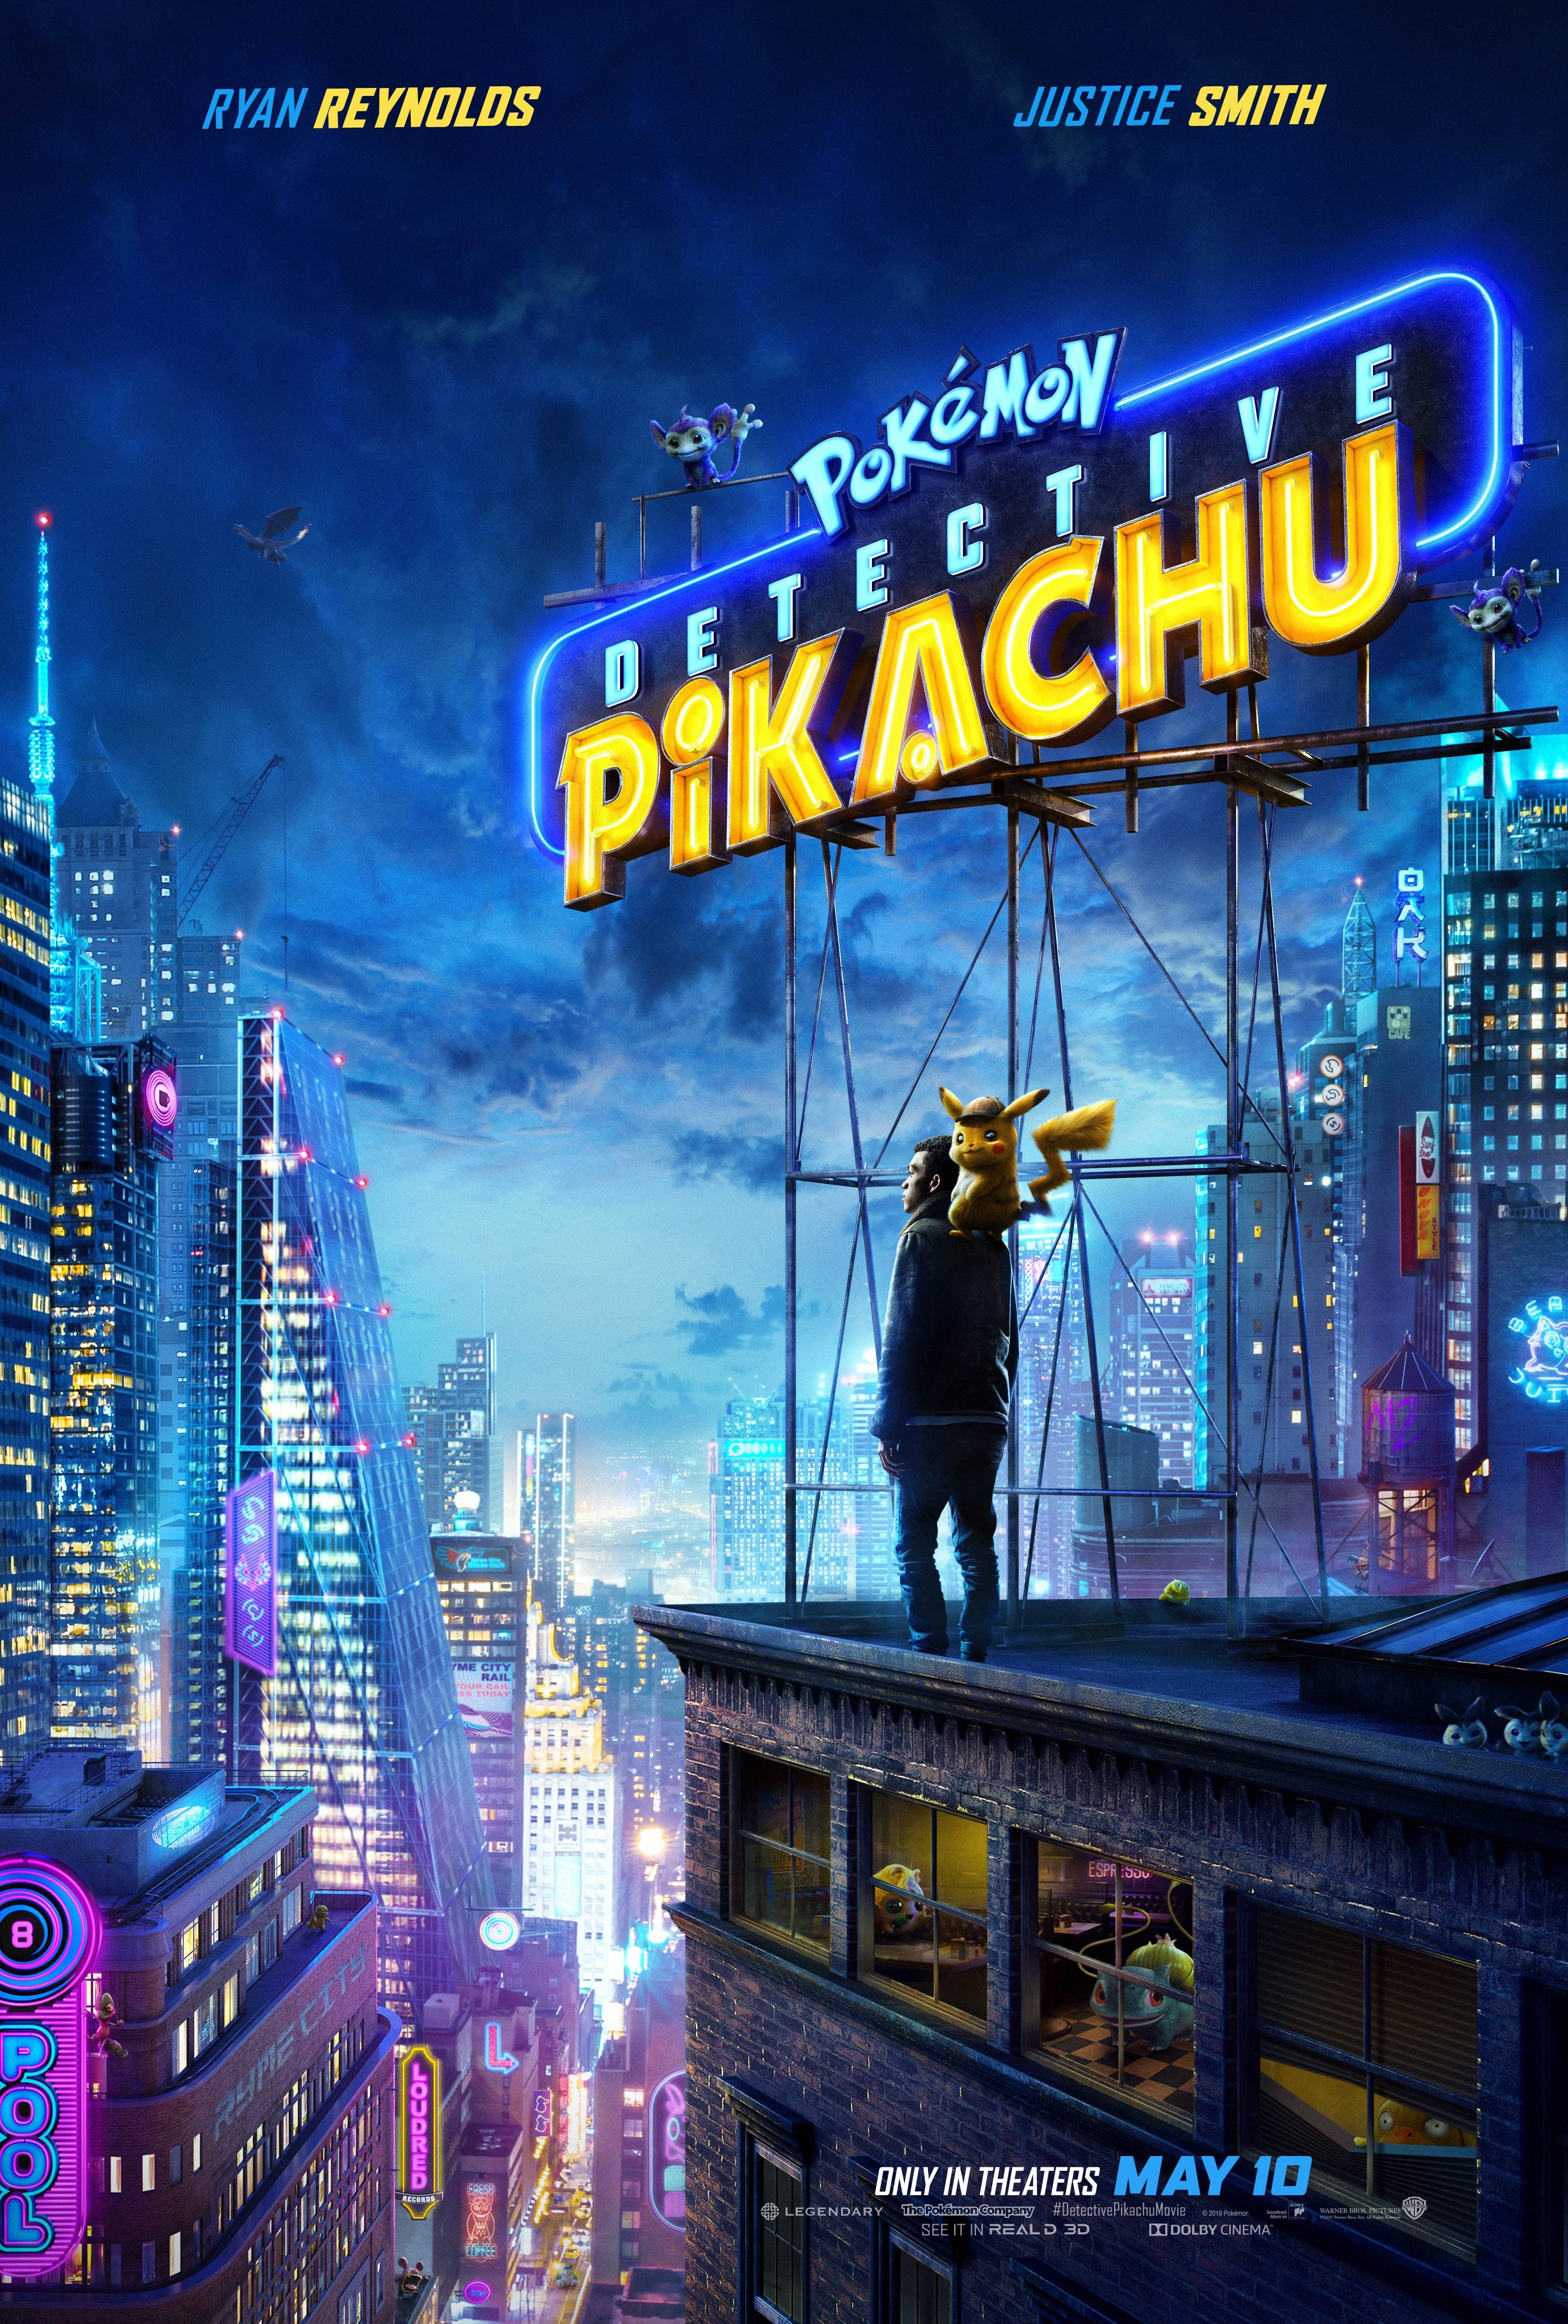 Poster Pokémon Pikachu • La Pokémon Boutique